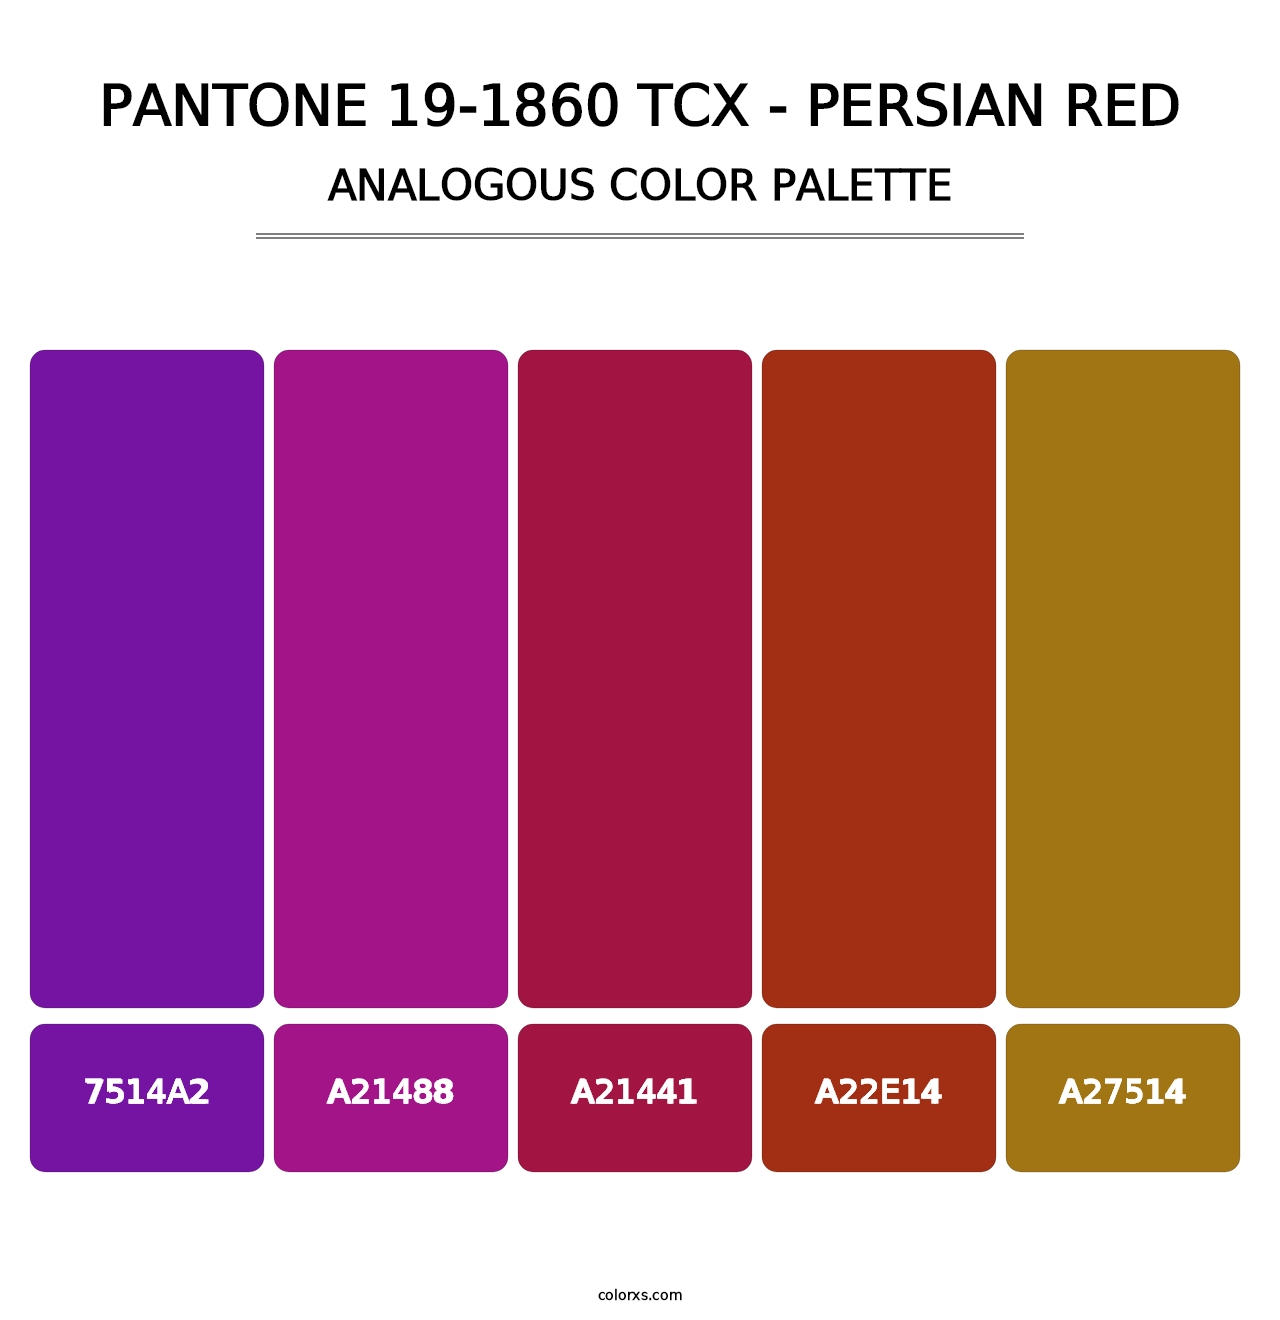 PANTONE 19-1860 TCX - Persian Red - Analogous Color Palette